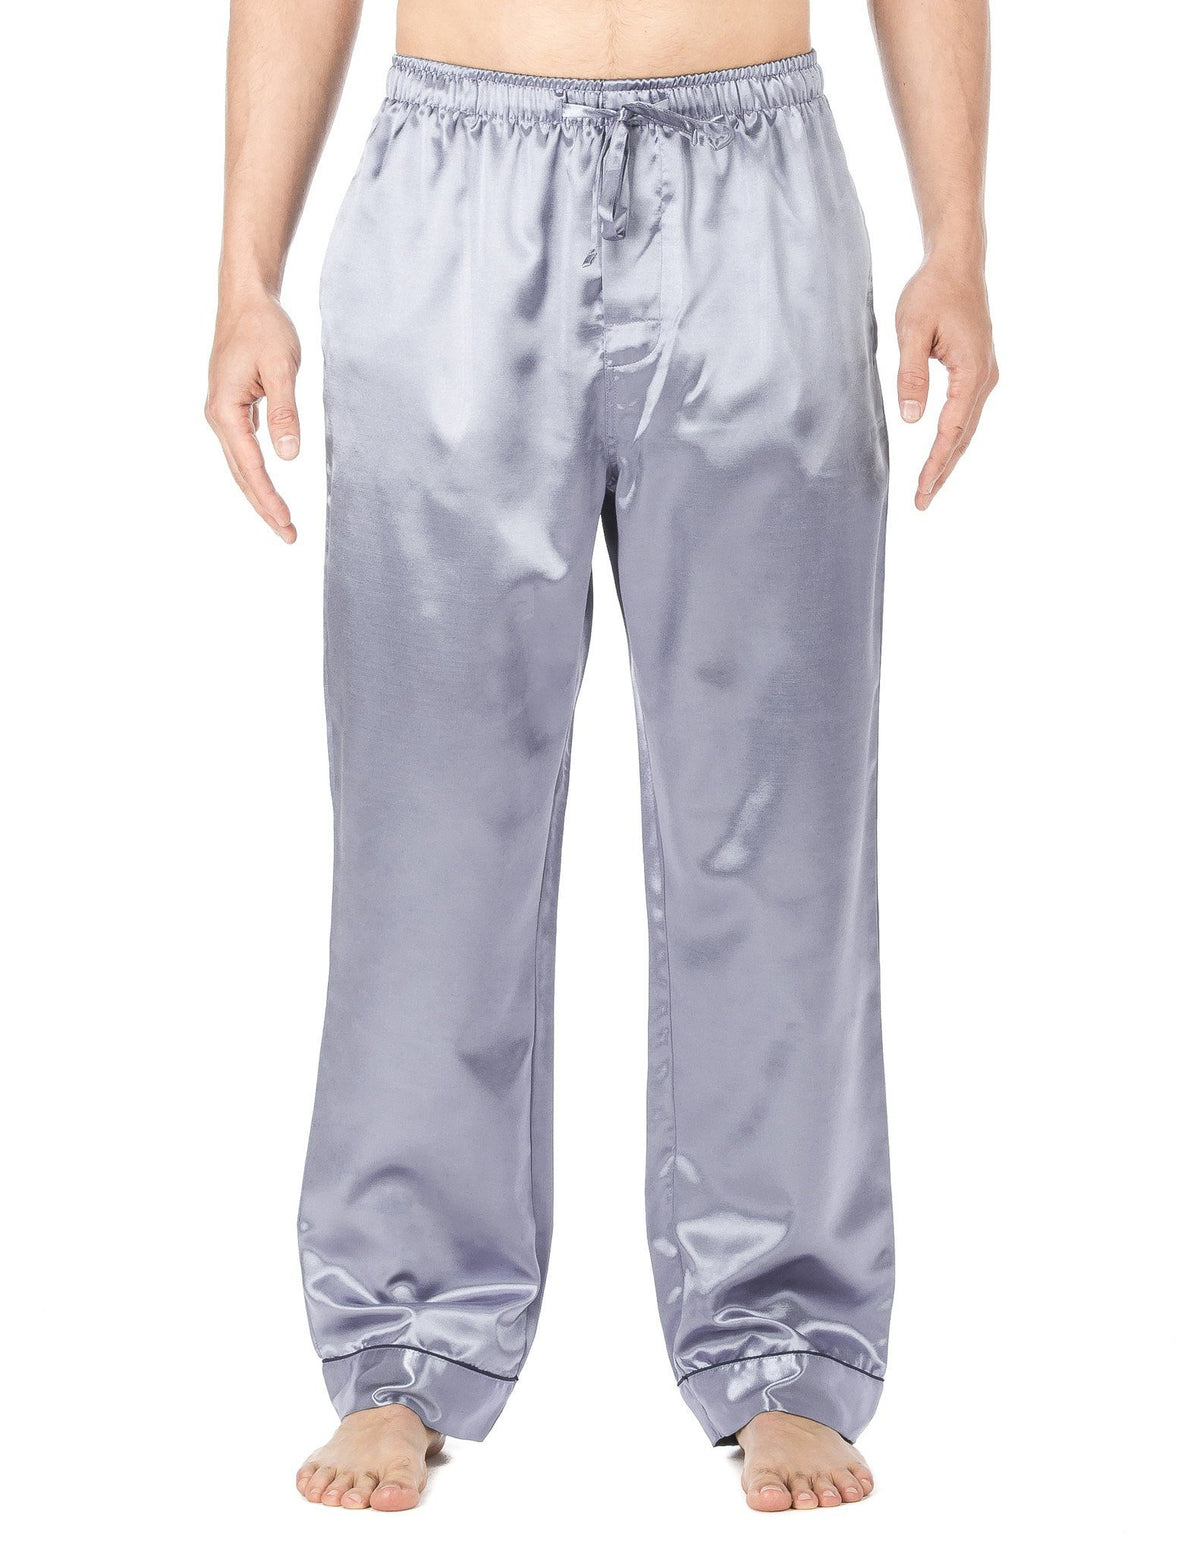 omfortable and Stylish Bulk Pajama Pants 